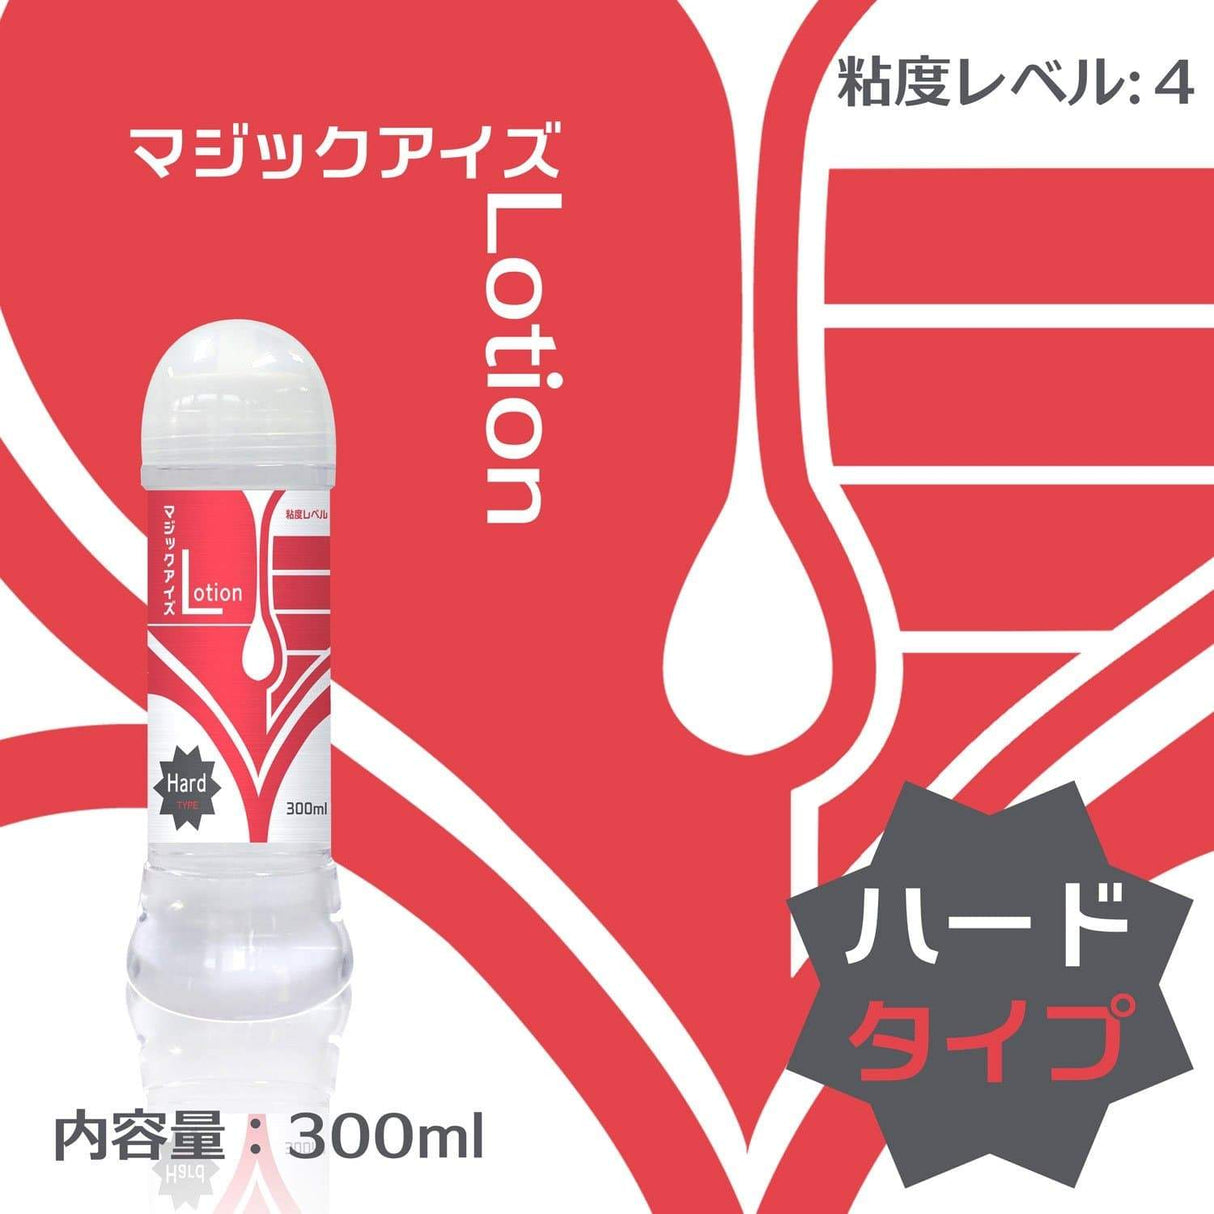 Magic Eyes - Japan Meiki Lotion Lubricant 300ml (Hard) MG1076 CherryAffairs